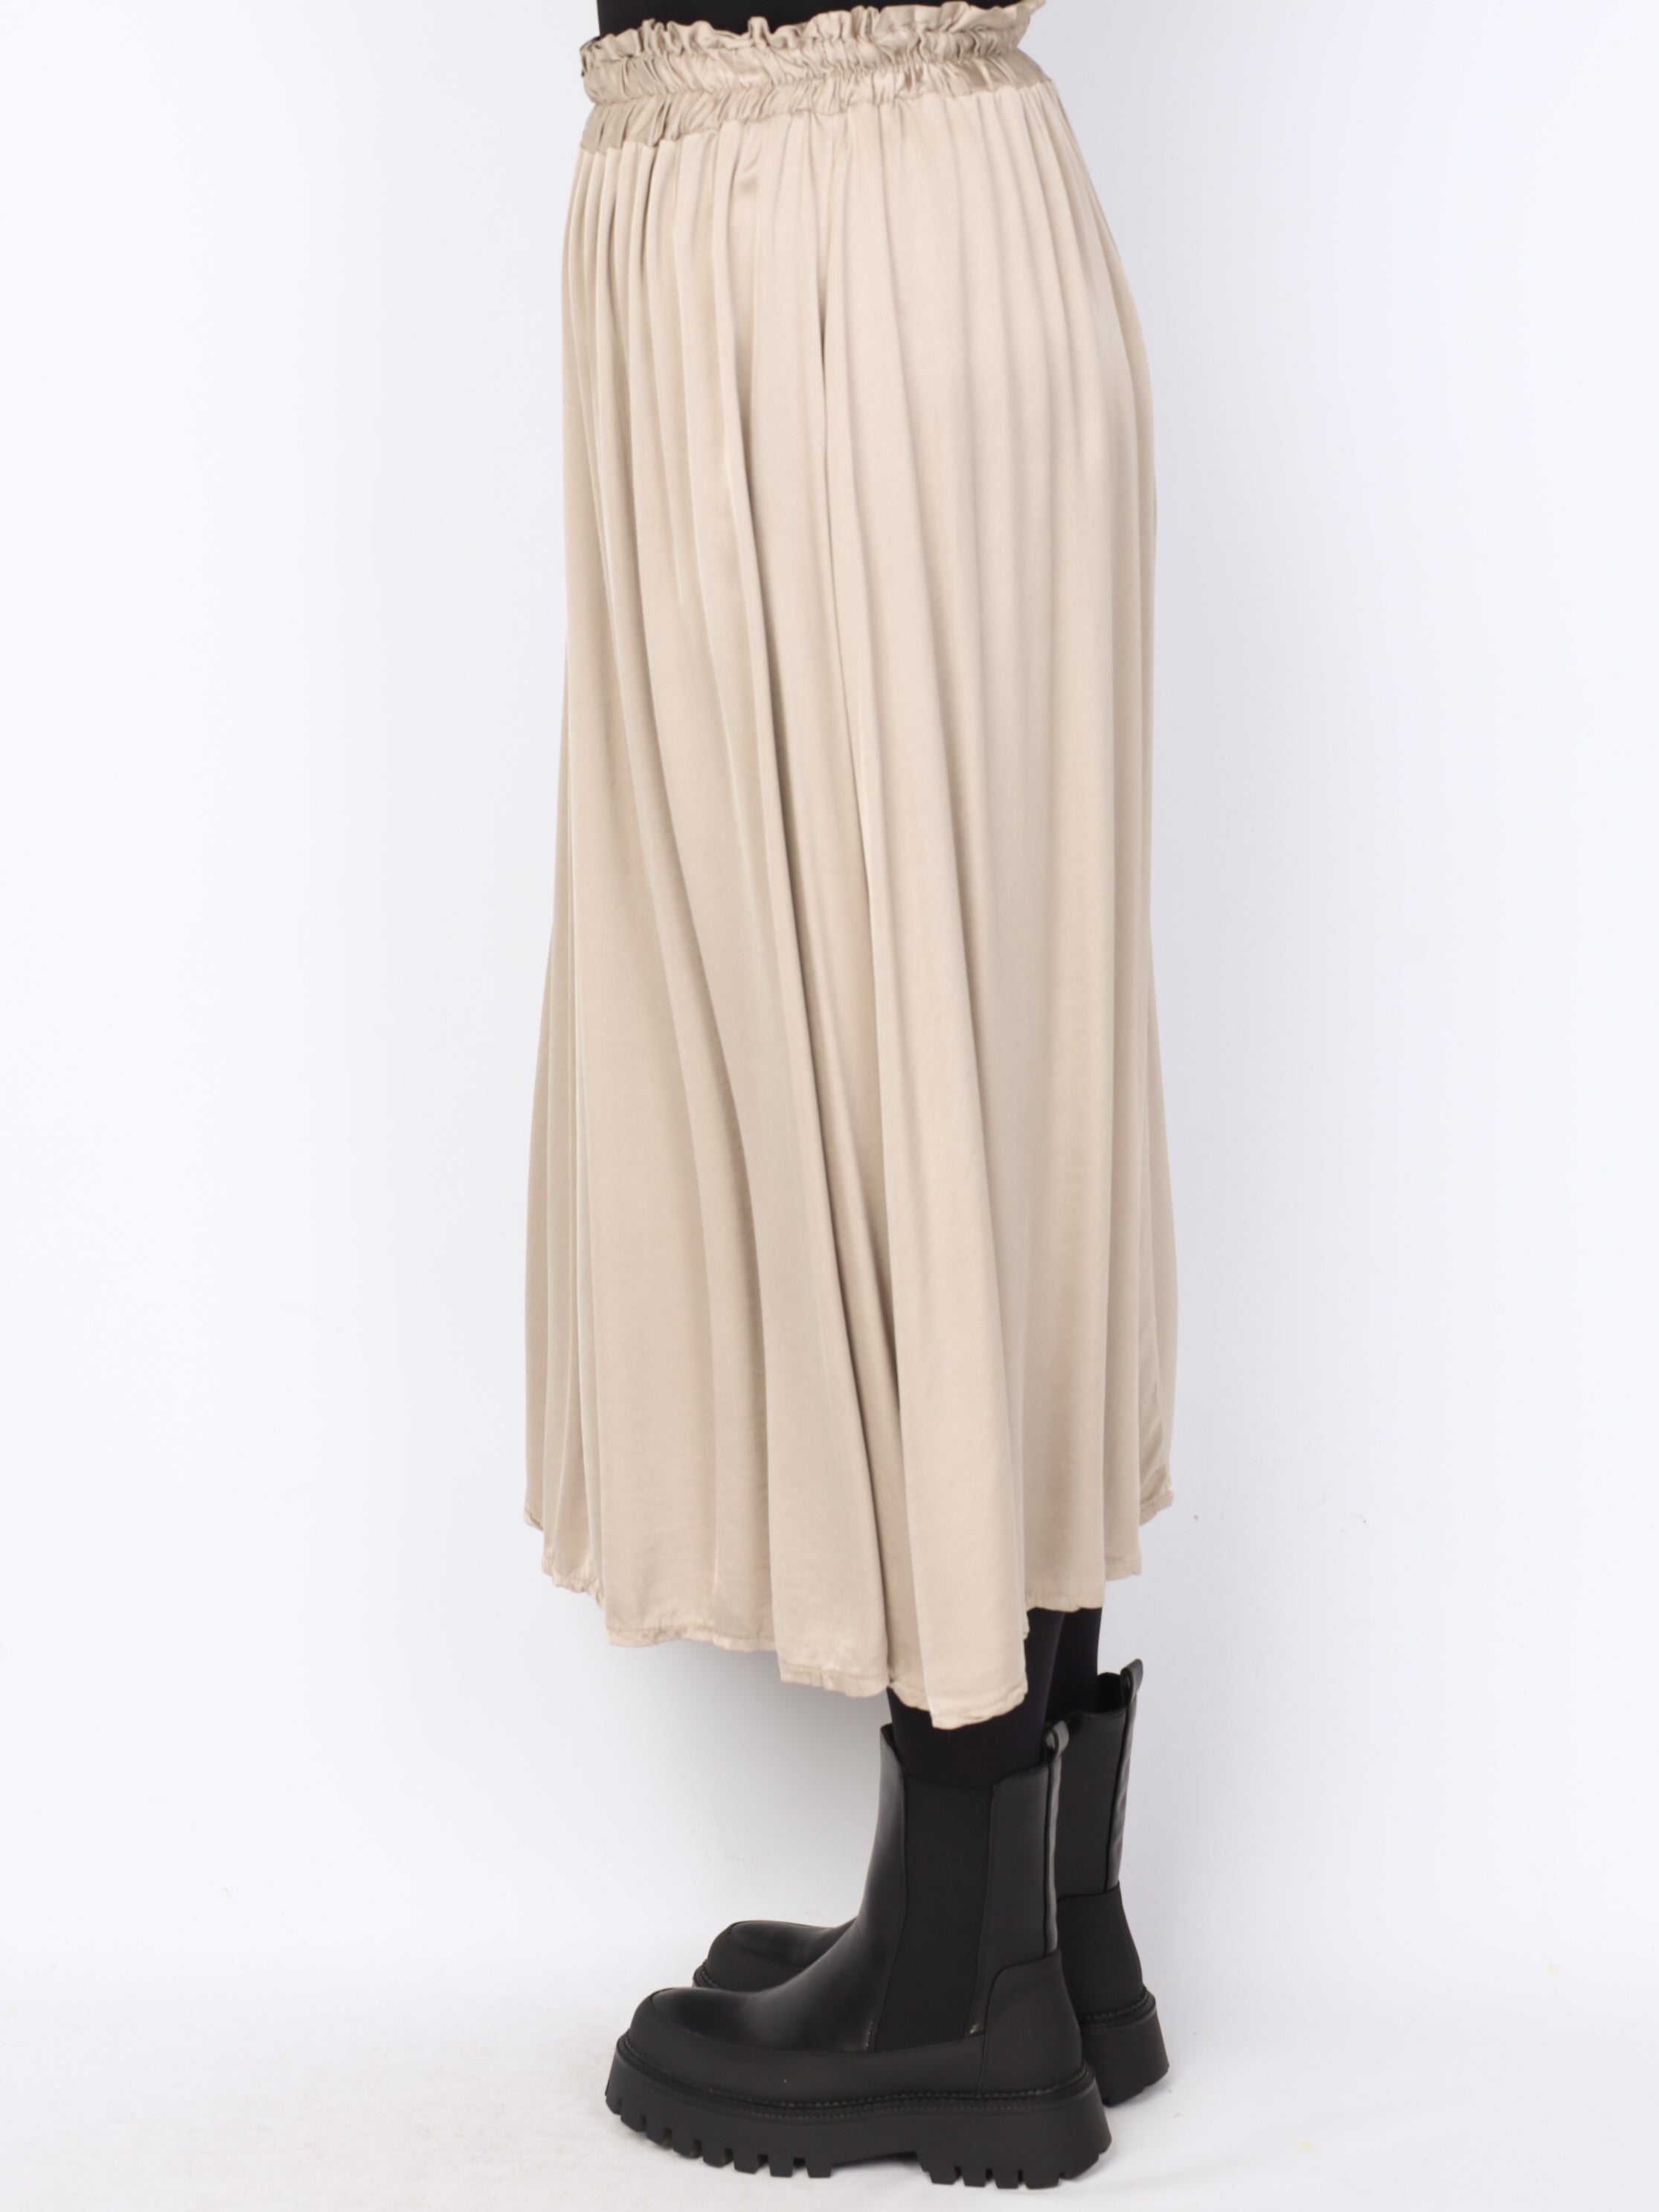 Shiny short skirt with elastic